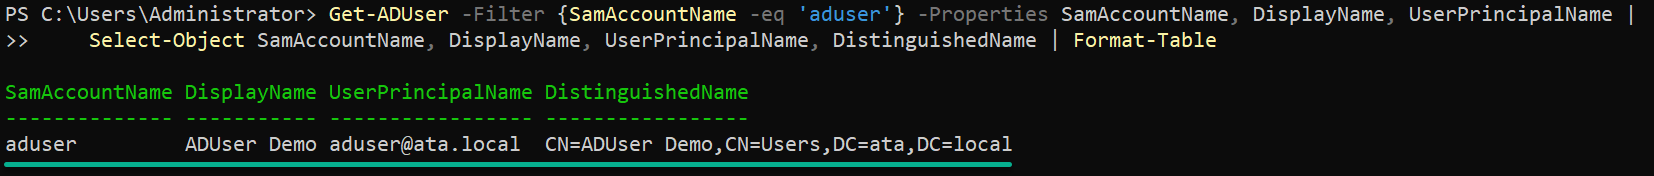 Extracting user attributes via Get-ADUser - Specific user